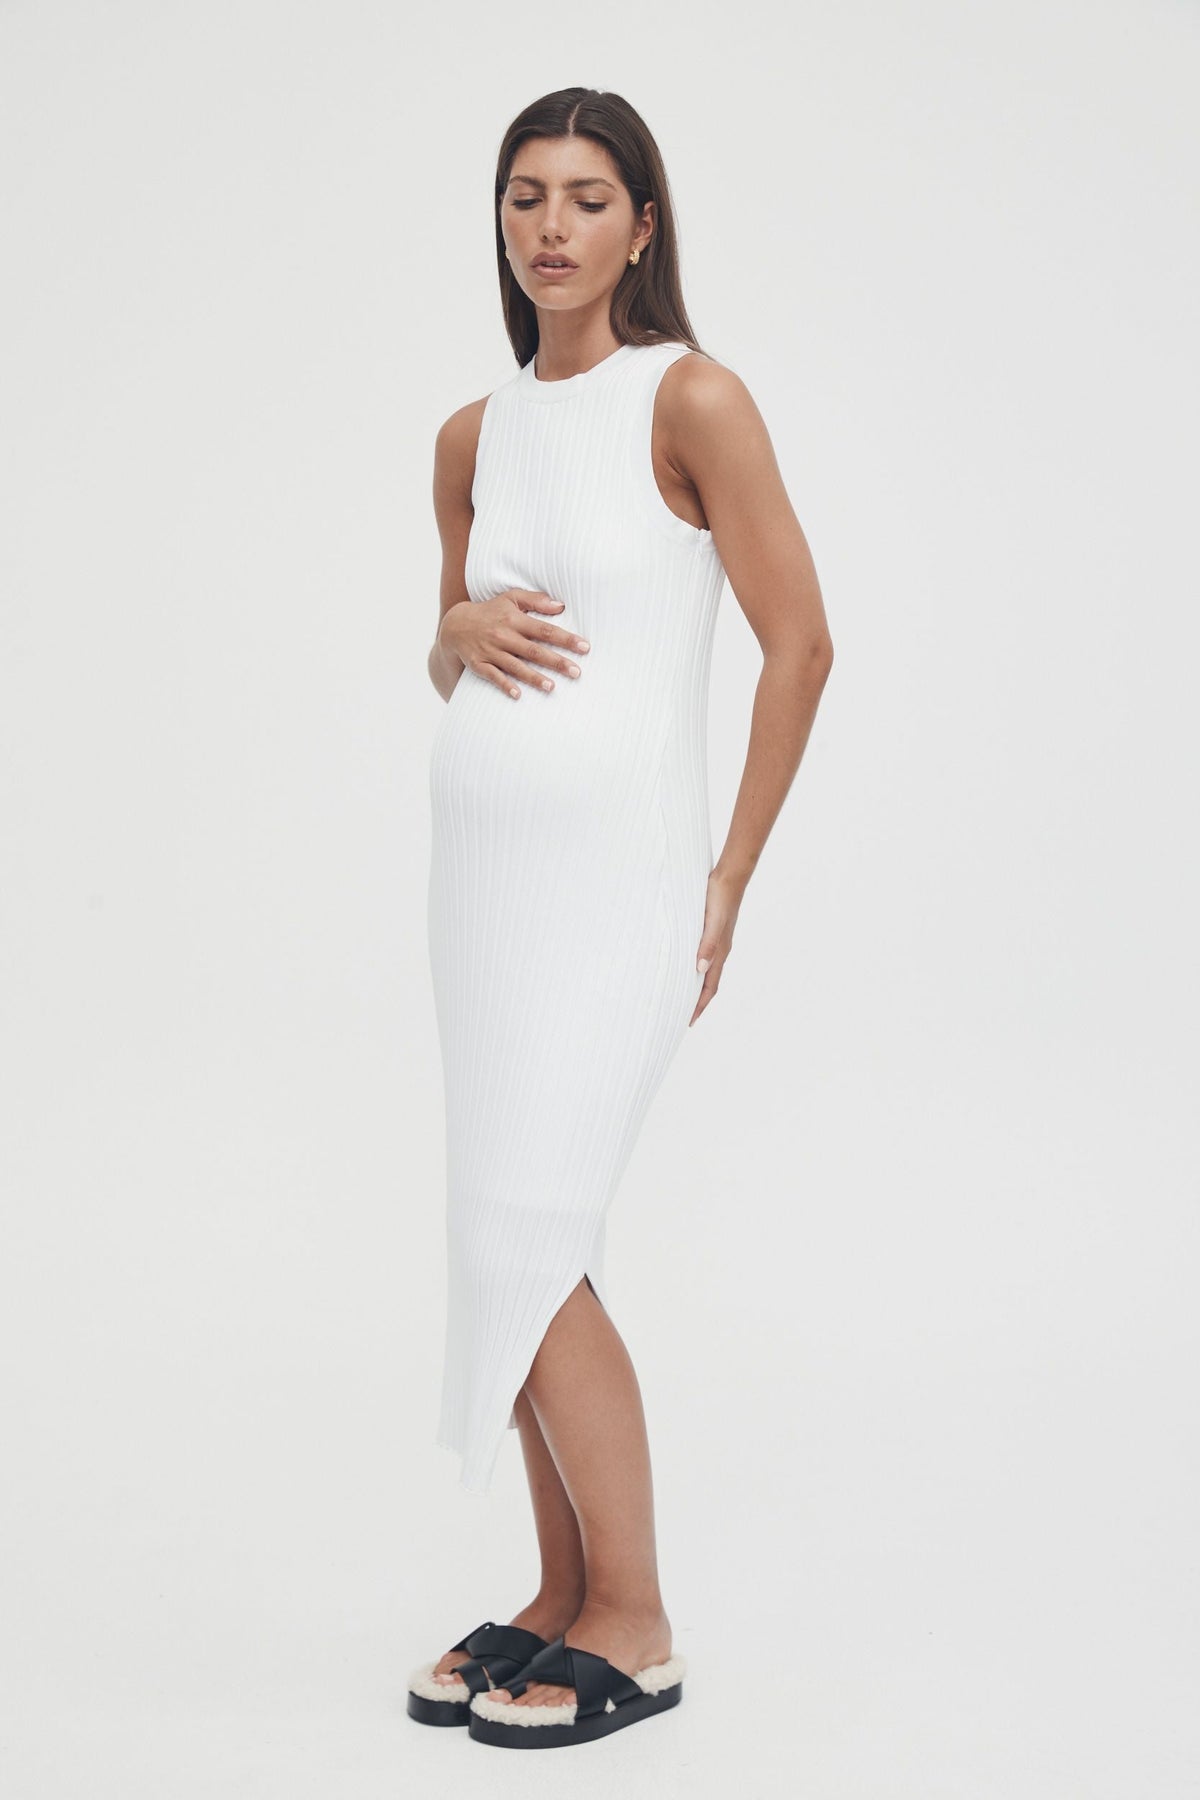 Babyshower Dress (White) 1